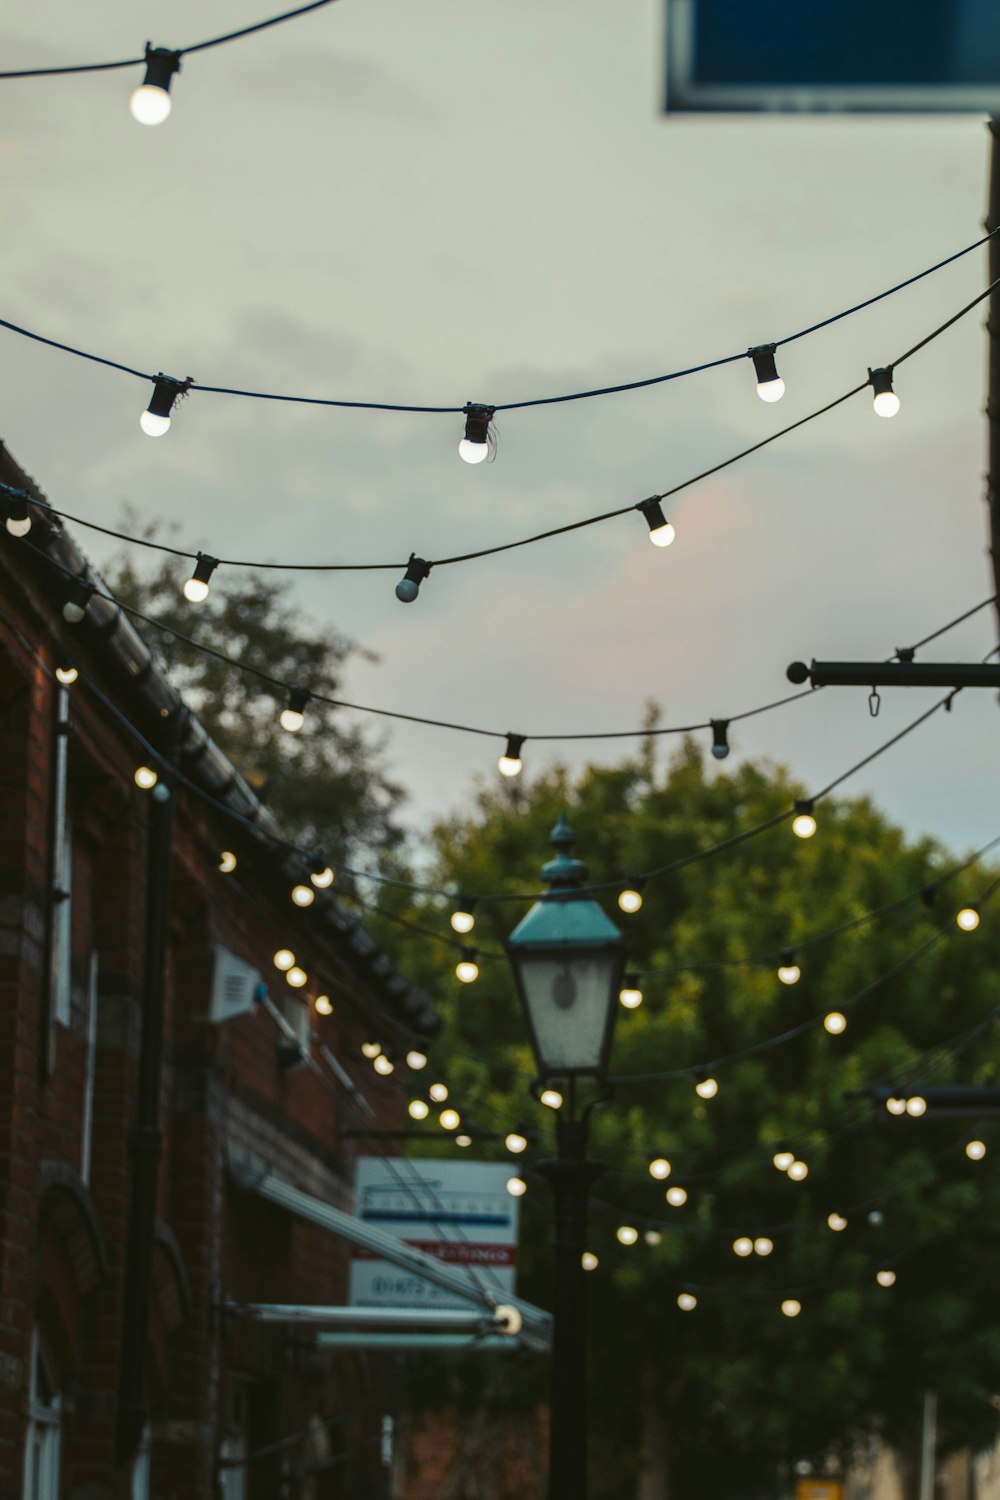 white string lights during daytime photo – Free Ipswich Image on Unsplash